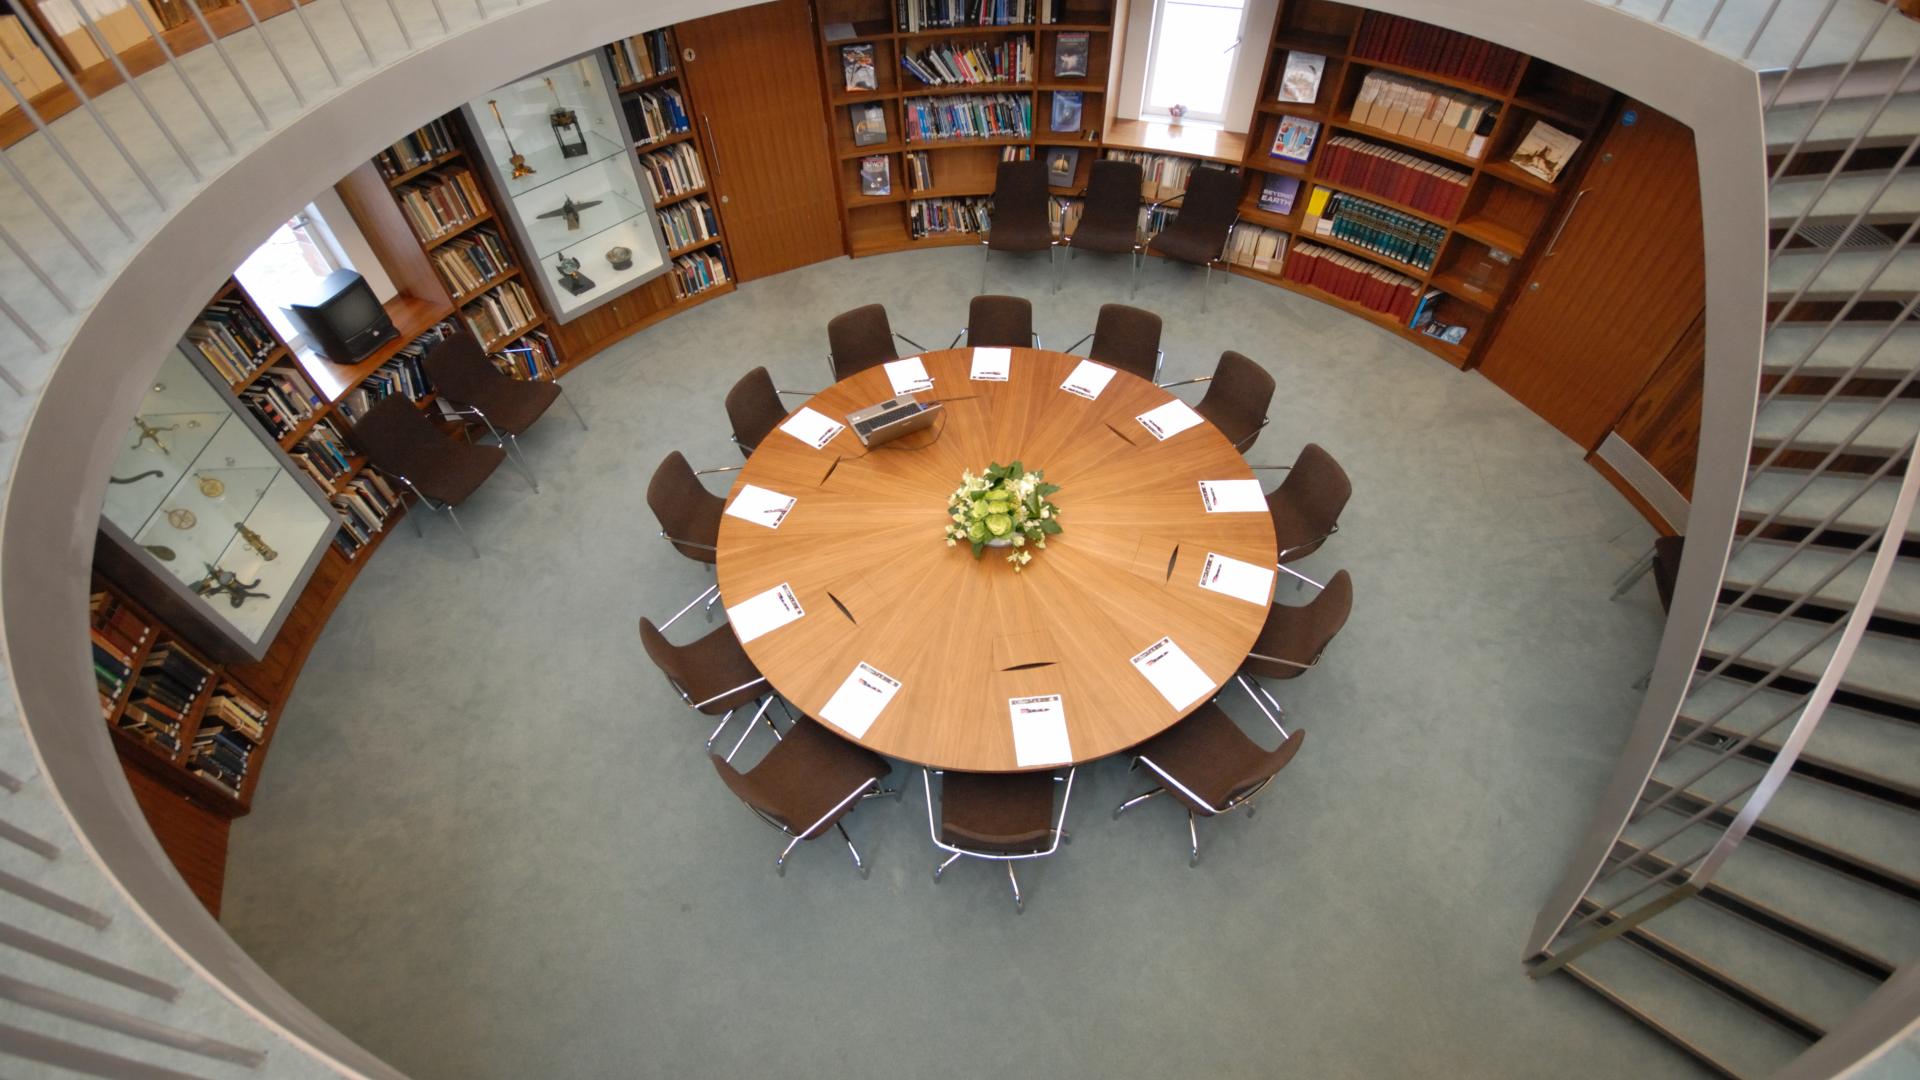 Meeting Rooms for Hire in Dagenham